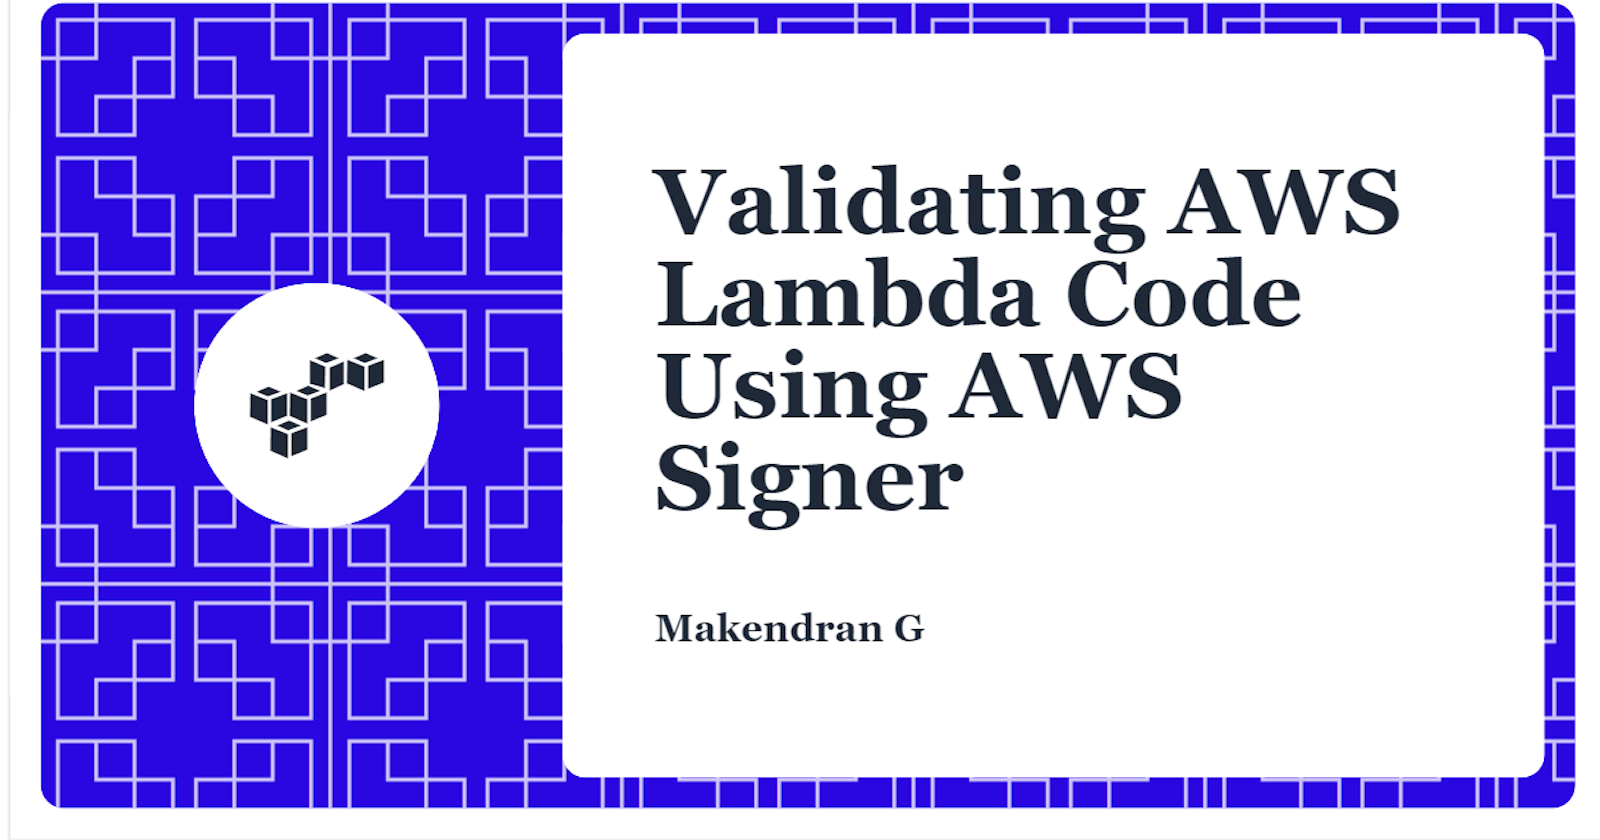 Validating AWS Lambda Code Using AWS Signer